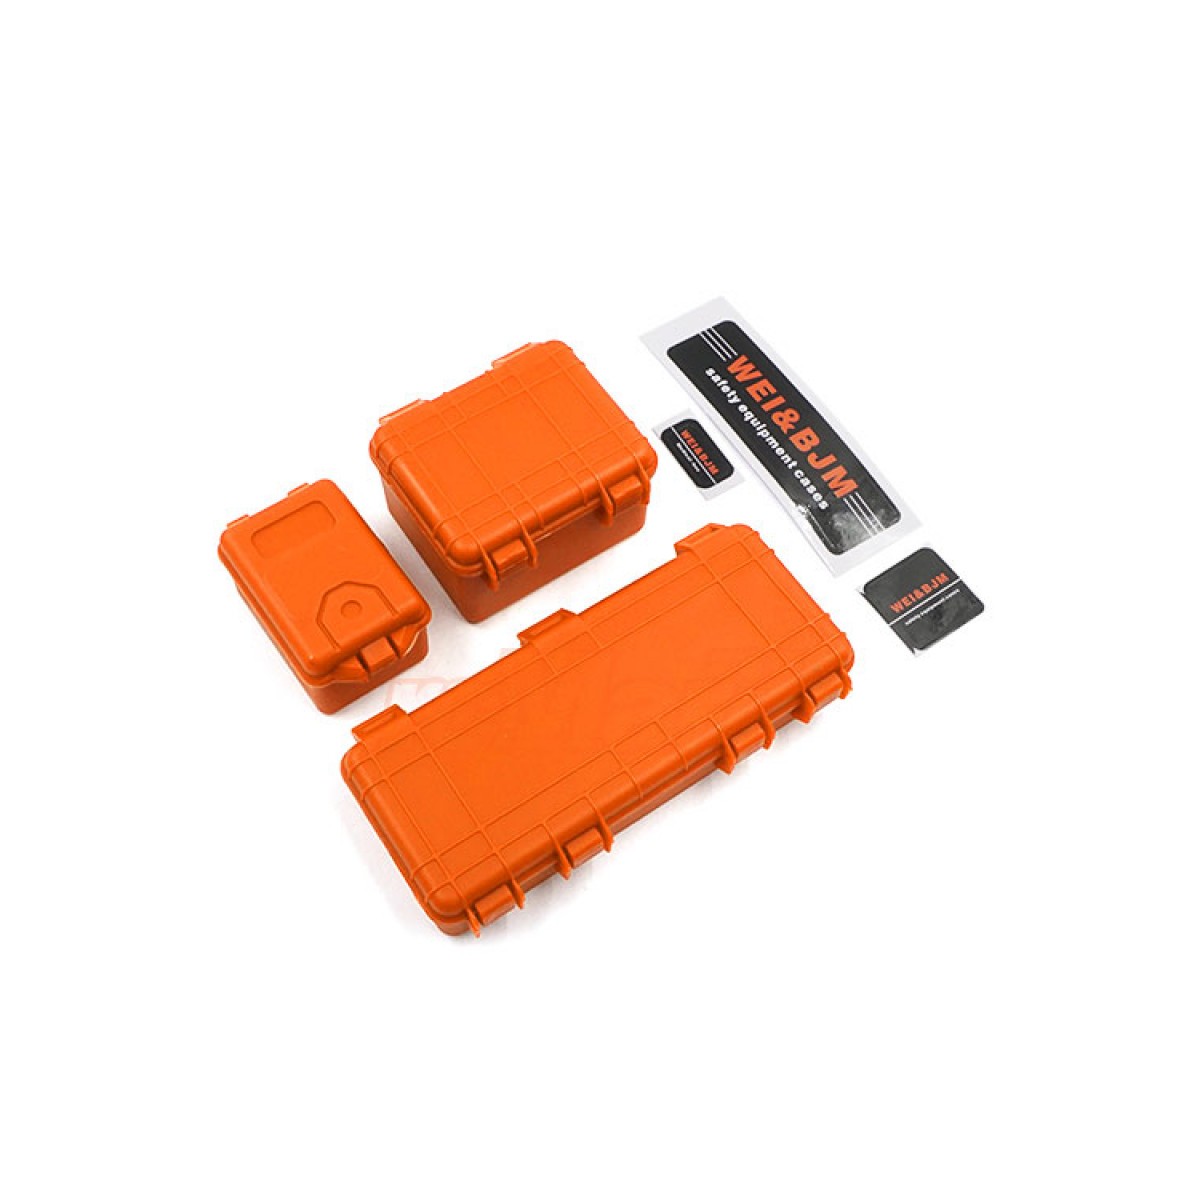 https://tamico.de/media/image/product/277821/lg/xtra-speed-scale-kisten-set-3-crawler-zubehoer-1-10-orange.jpg